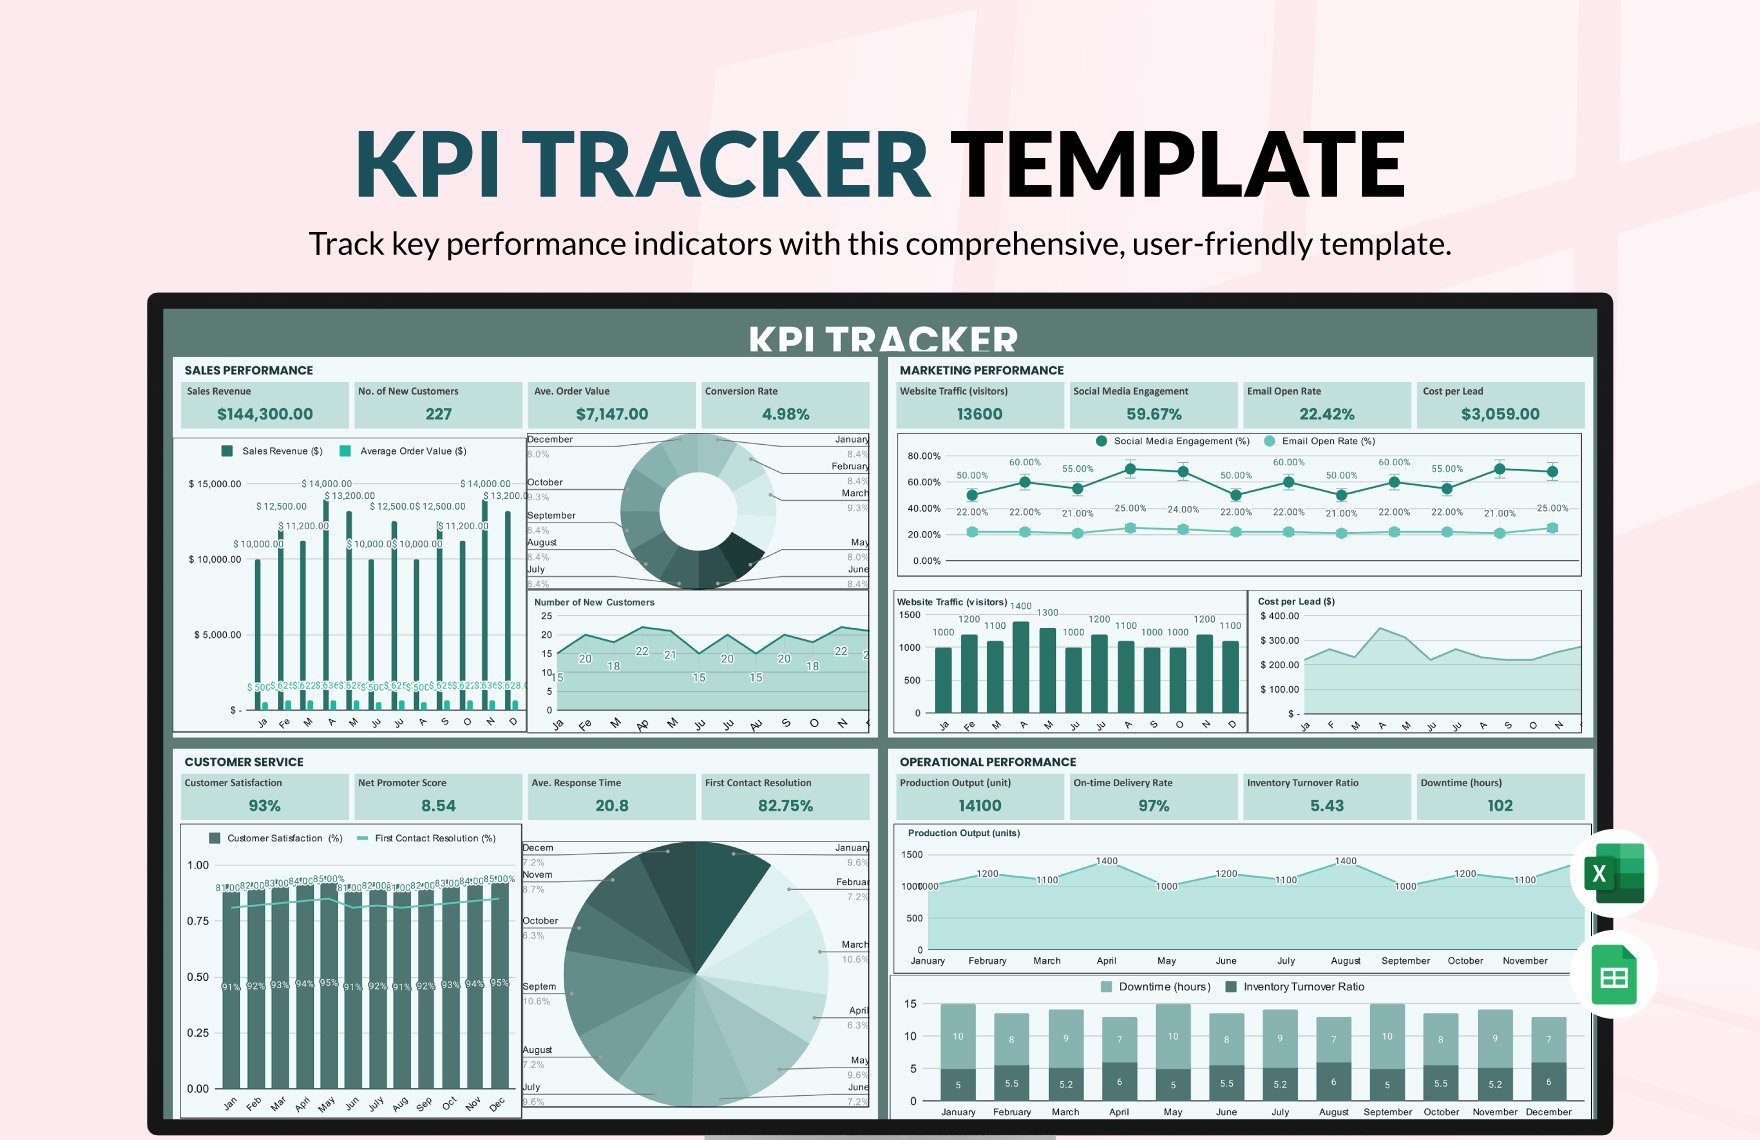 KPI Tracker Template